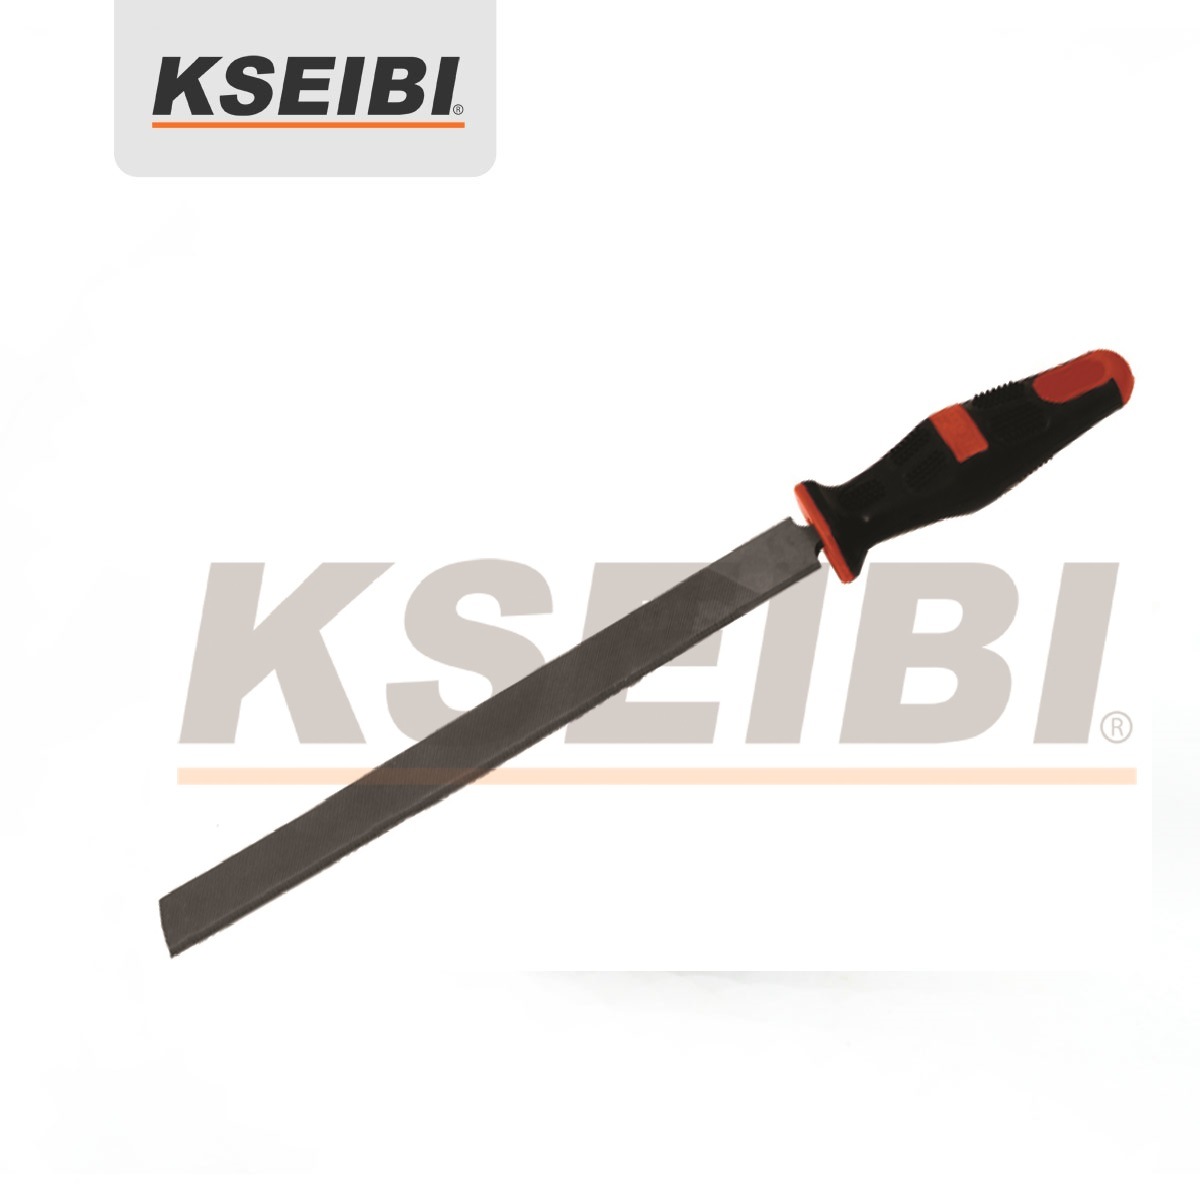 Abrasive Hand Tool Kseibi Steel Half Round Files with Handle